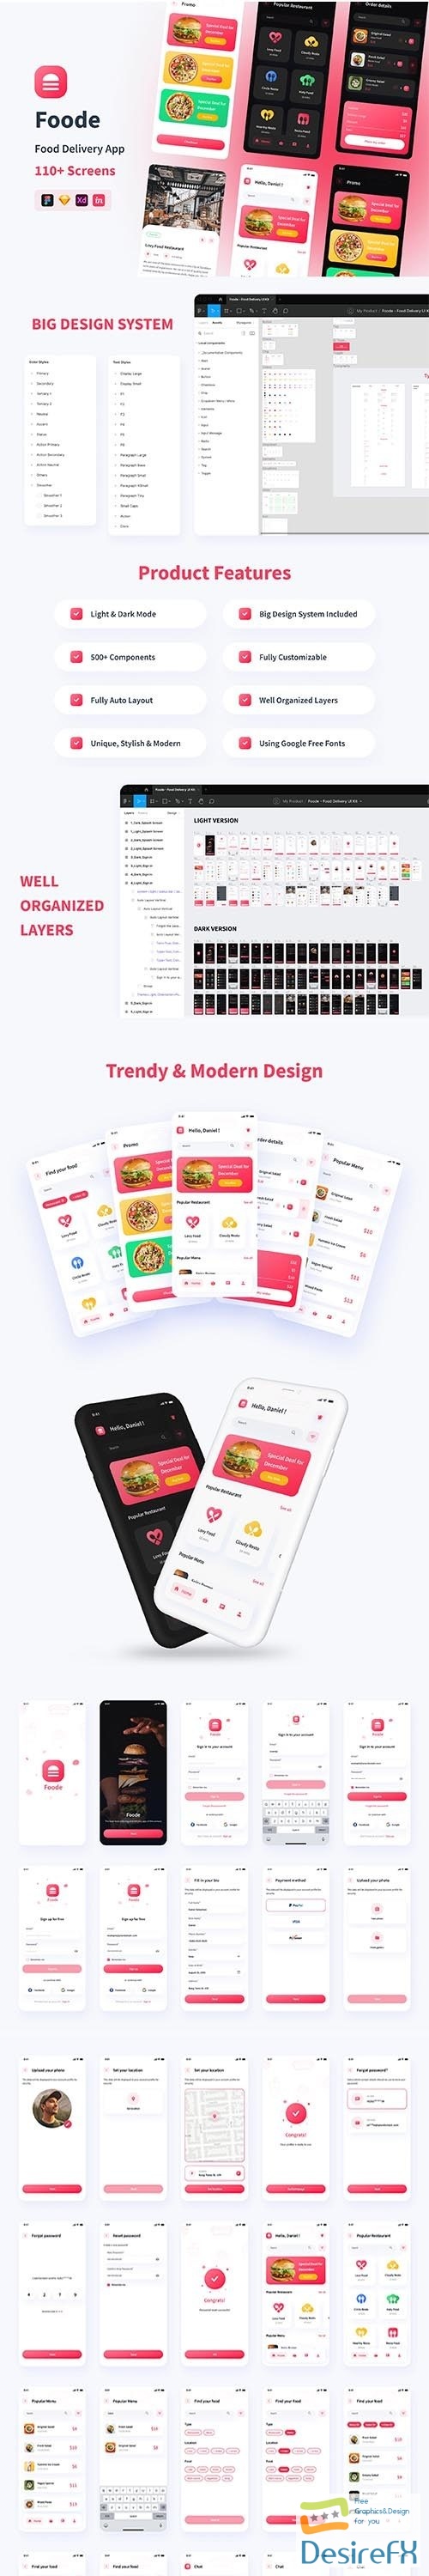 Foode - Food Delivery Mobile App UI Kit UI8